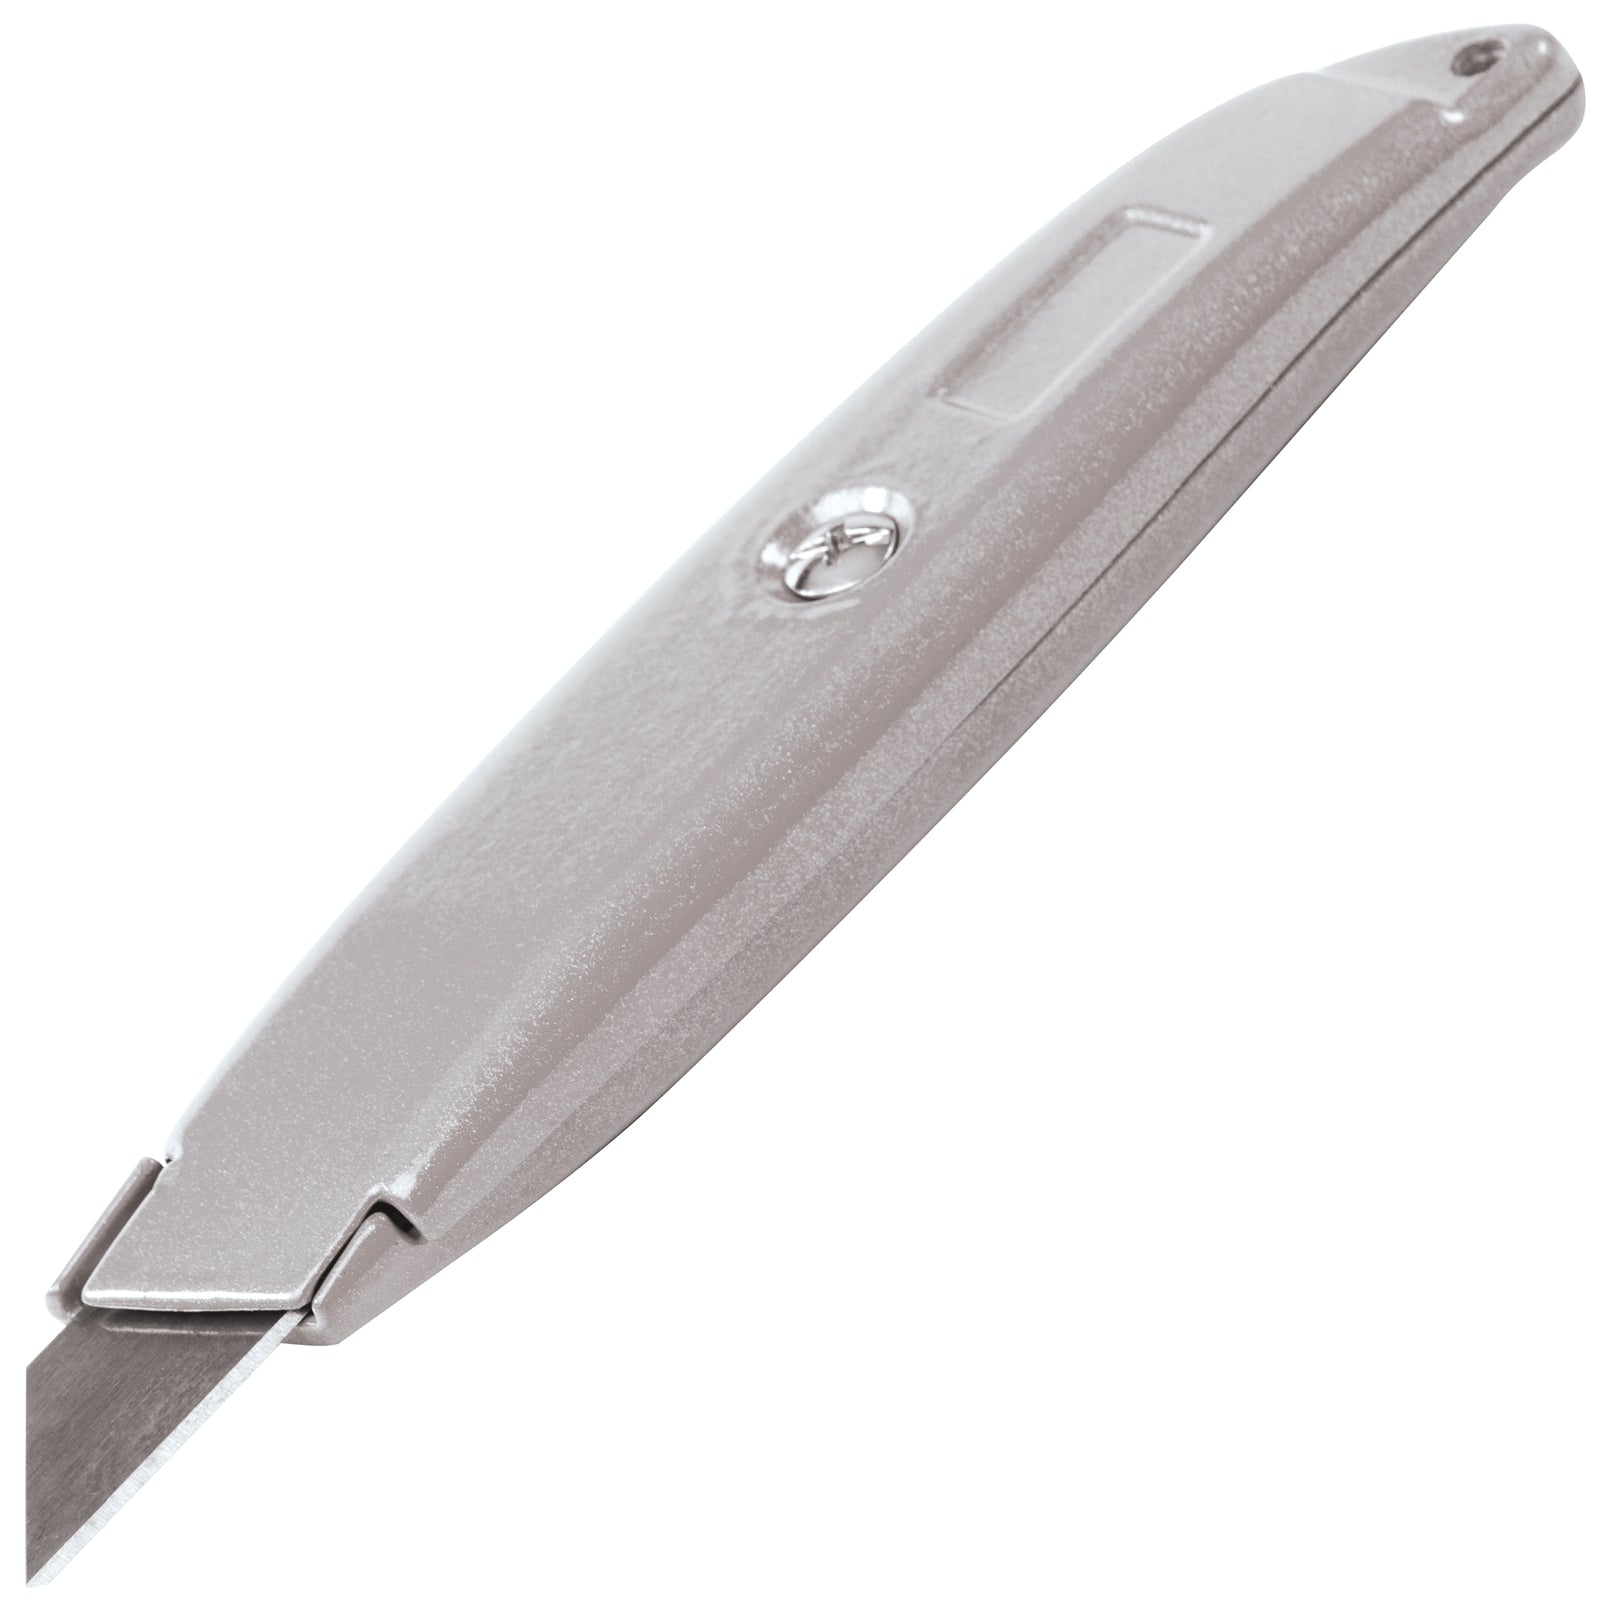 Silverline 150mm Retractable Knife